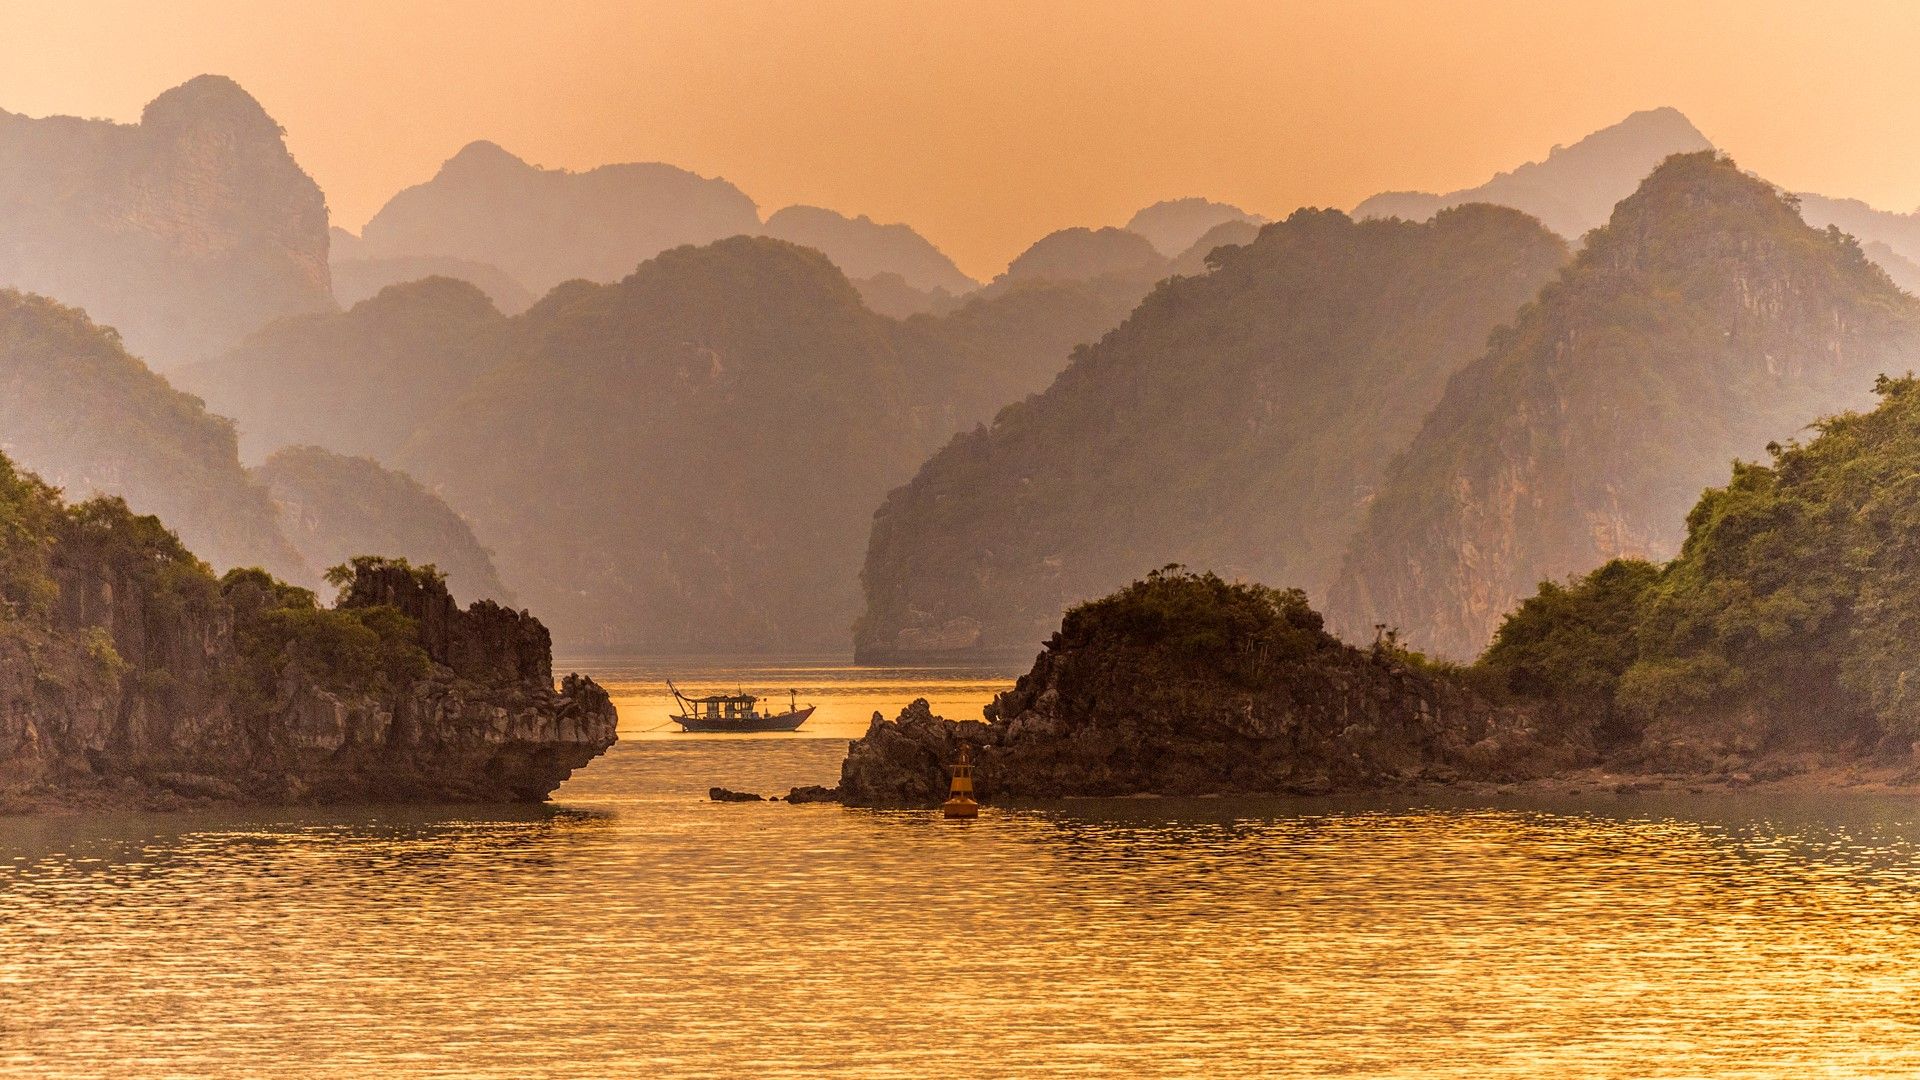 Sunset in Halong Bay Vietnam [1920x1080] #remoteplaces #travel #Nordic #luxurytravel #exploring #hiddengems #lands. Ha long bay, Halong bay vietnam, Ha long